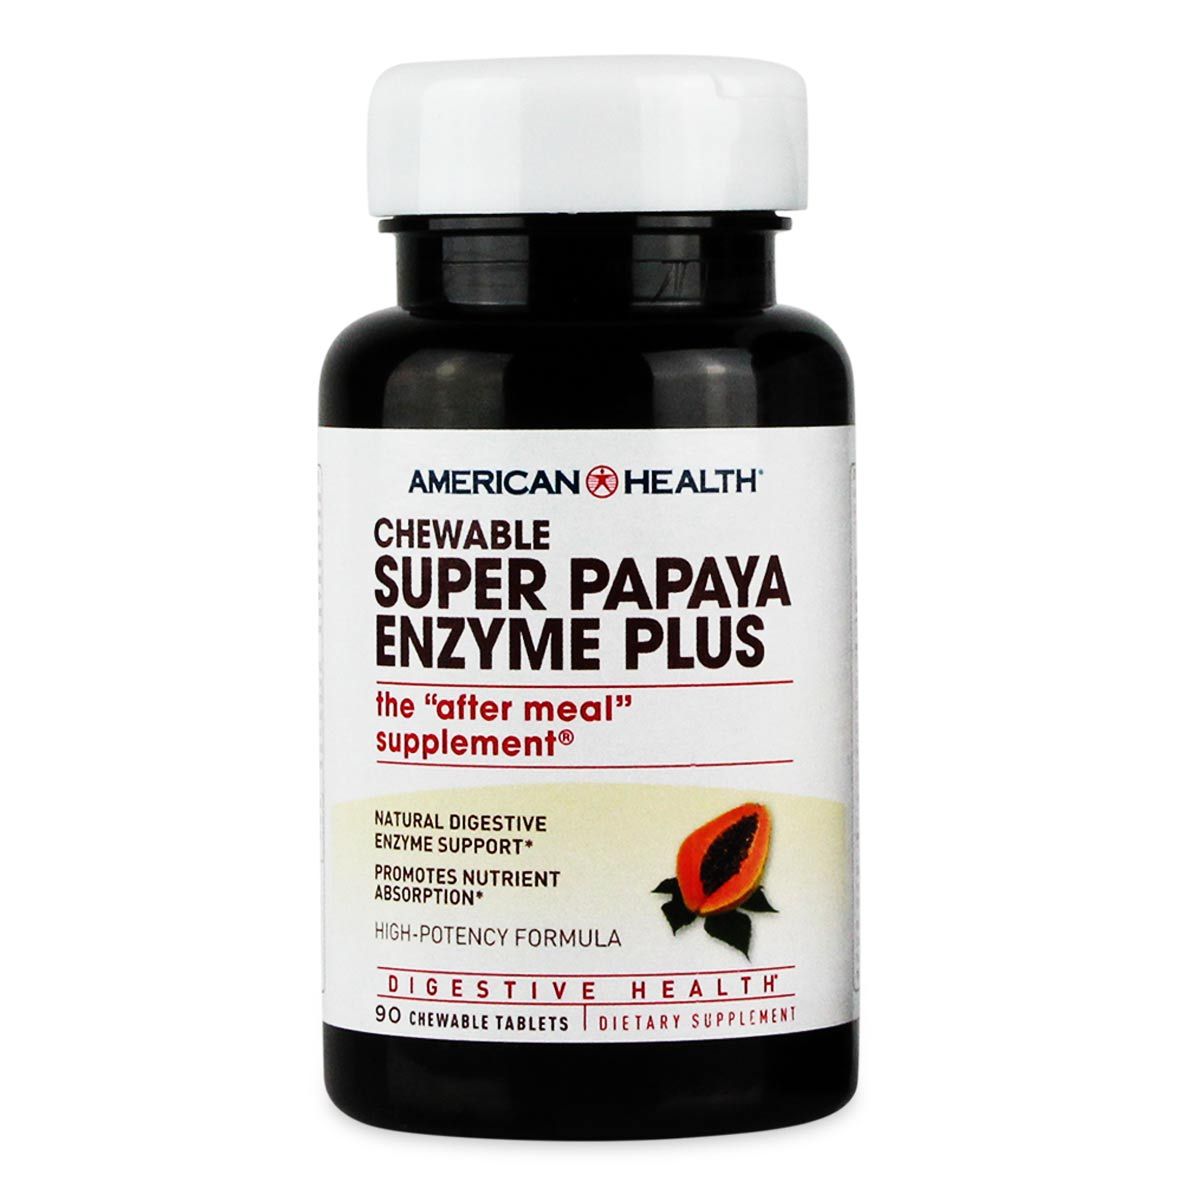 Primary image of Chewable Super Papaya Enzyme Plus